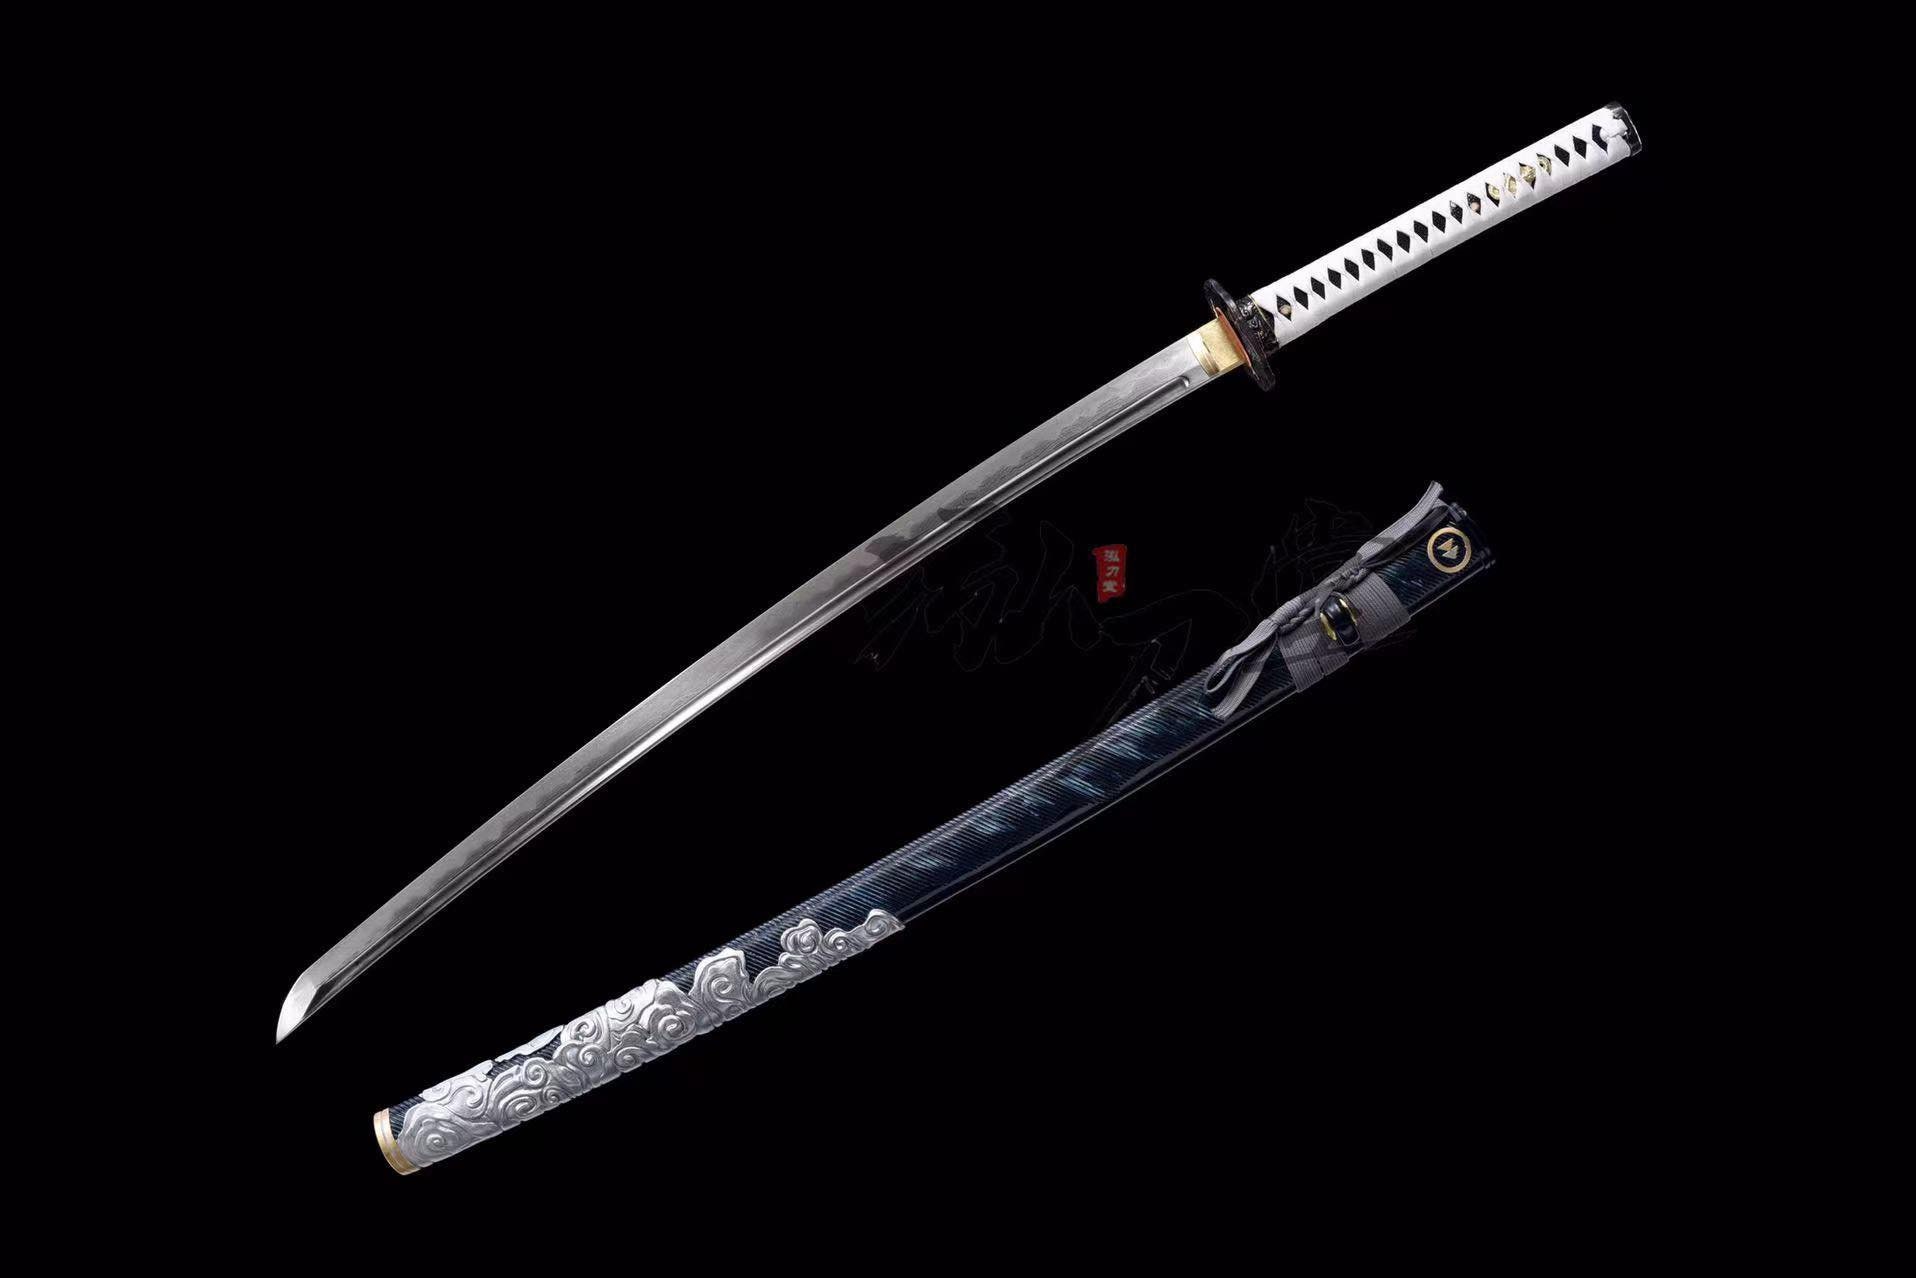  HanBon - Espada forjada de Demon Slayer de metal, espada  Rengoku, espada de anime, espada katana samurái japonesa, espada real de  acero T10, hoja de espiga completa, muy afilada, puede cortar